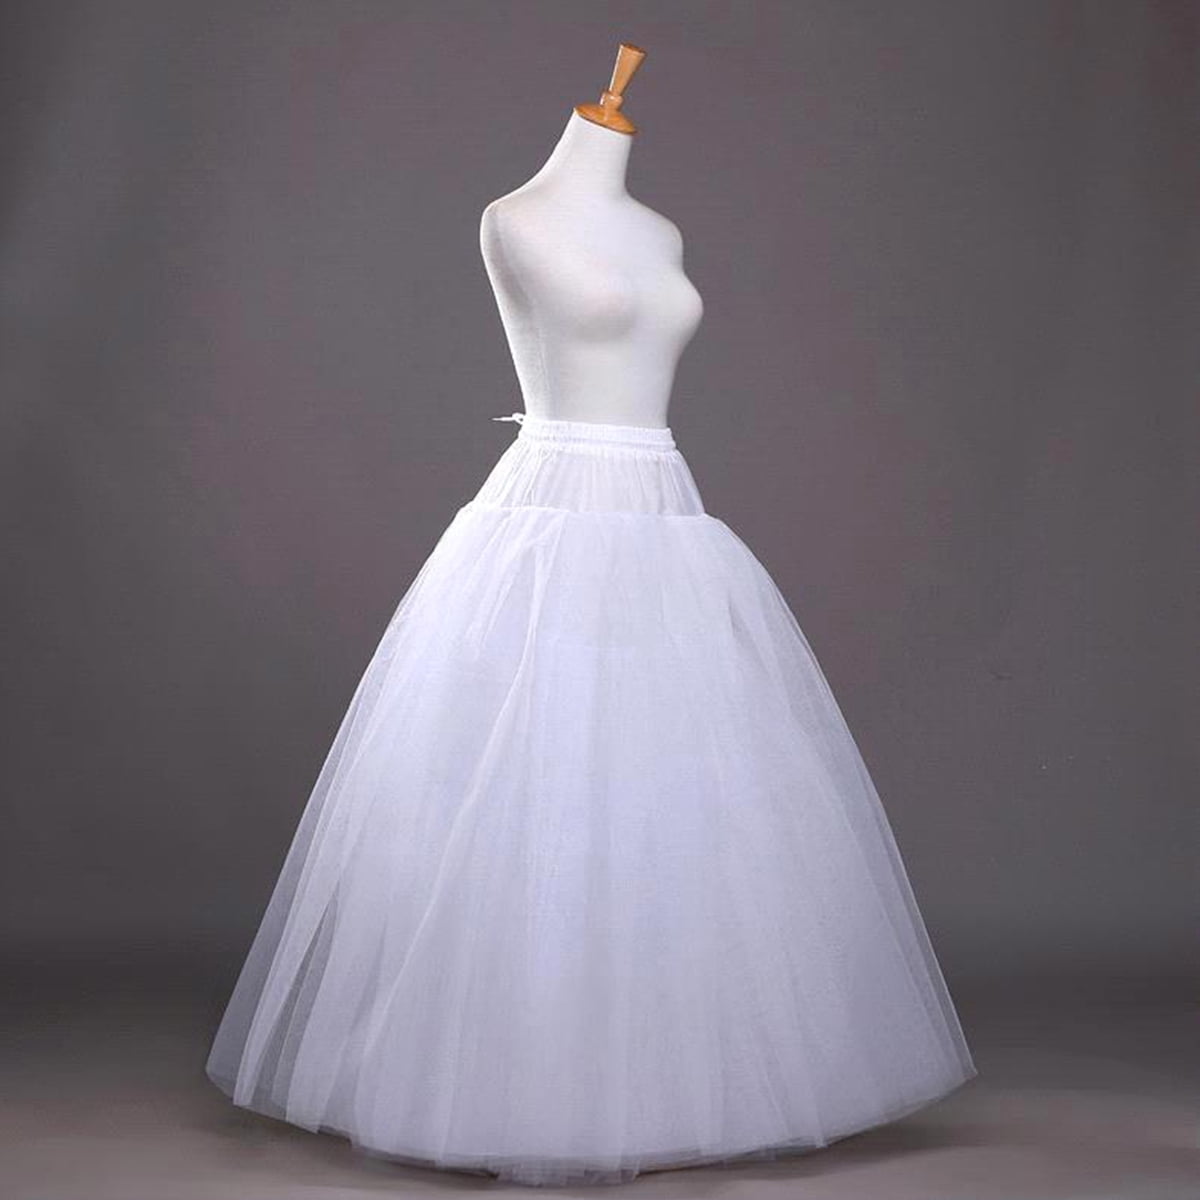 Wedding Underskirt A Line Wedding Bridal Petticoat 3 Hoops Skirt Crinoline Black 